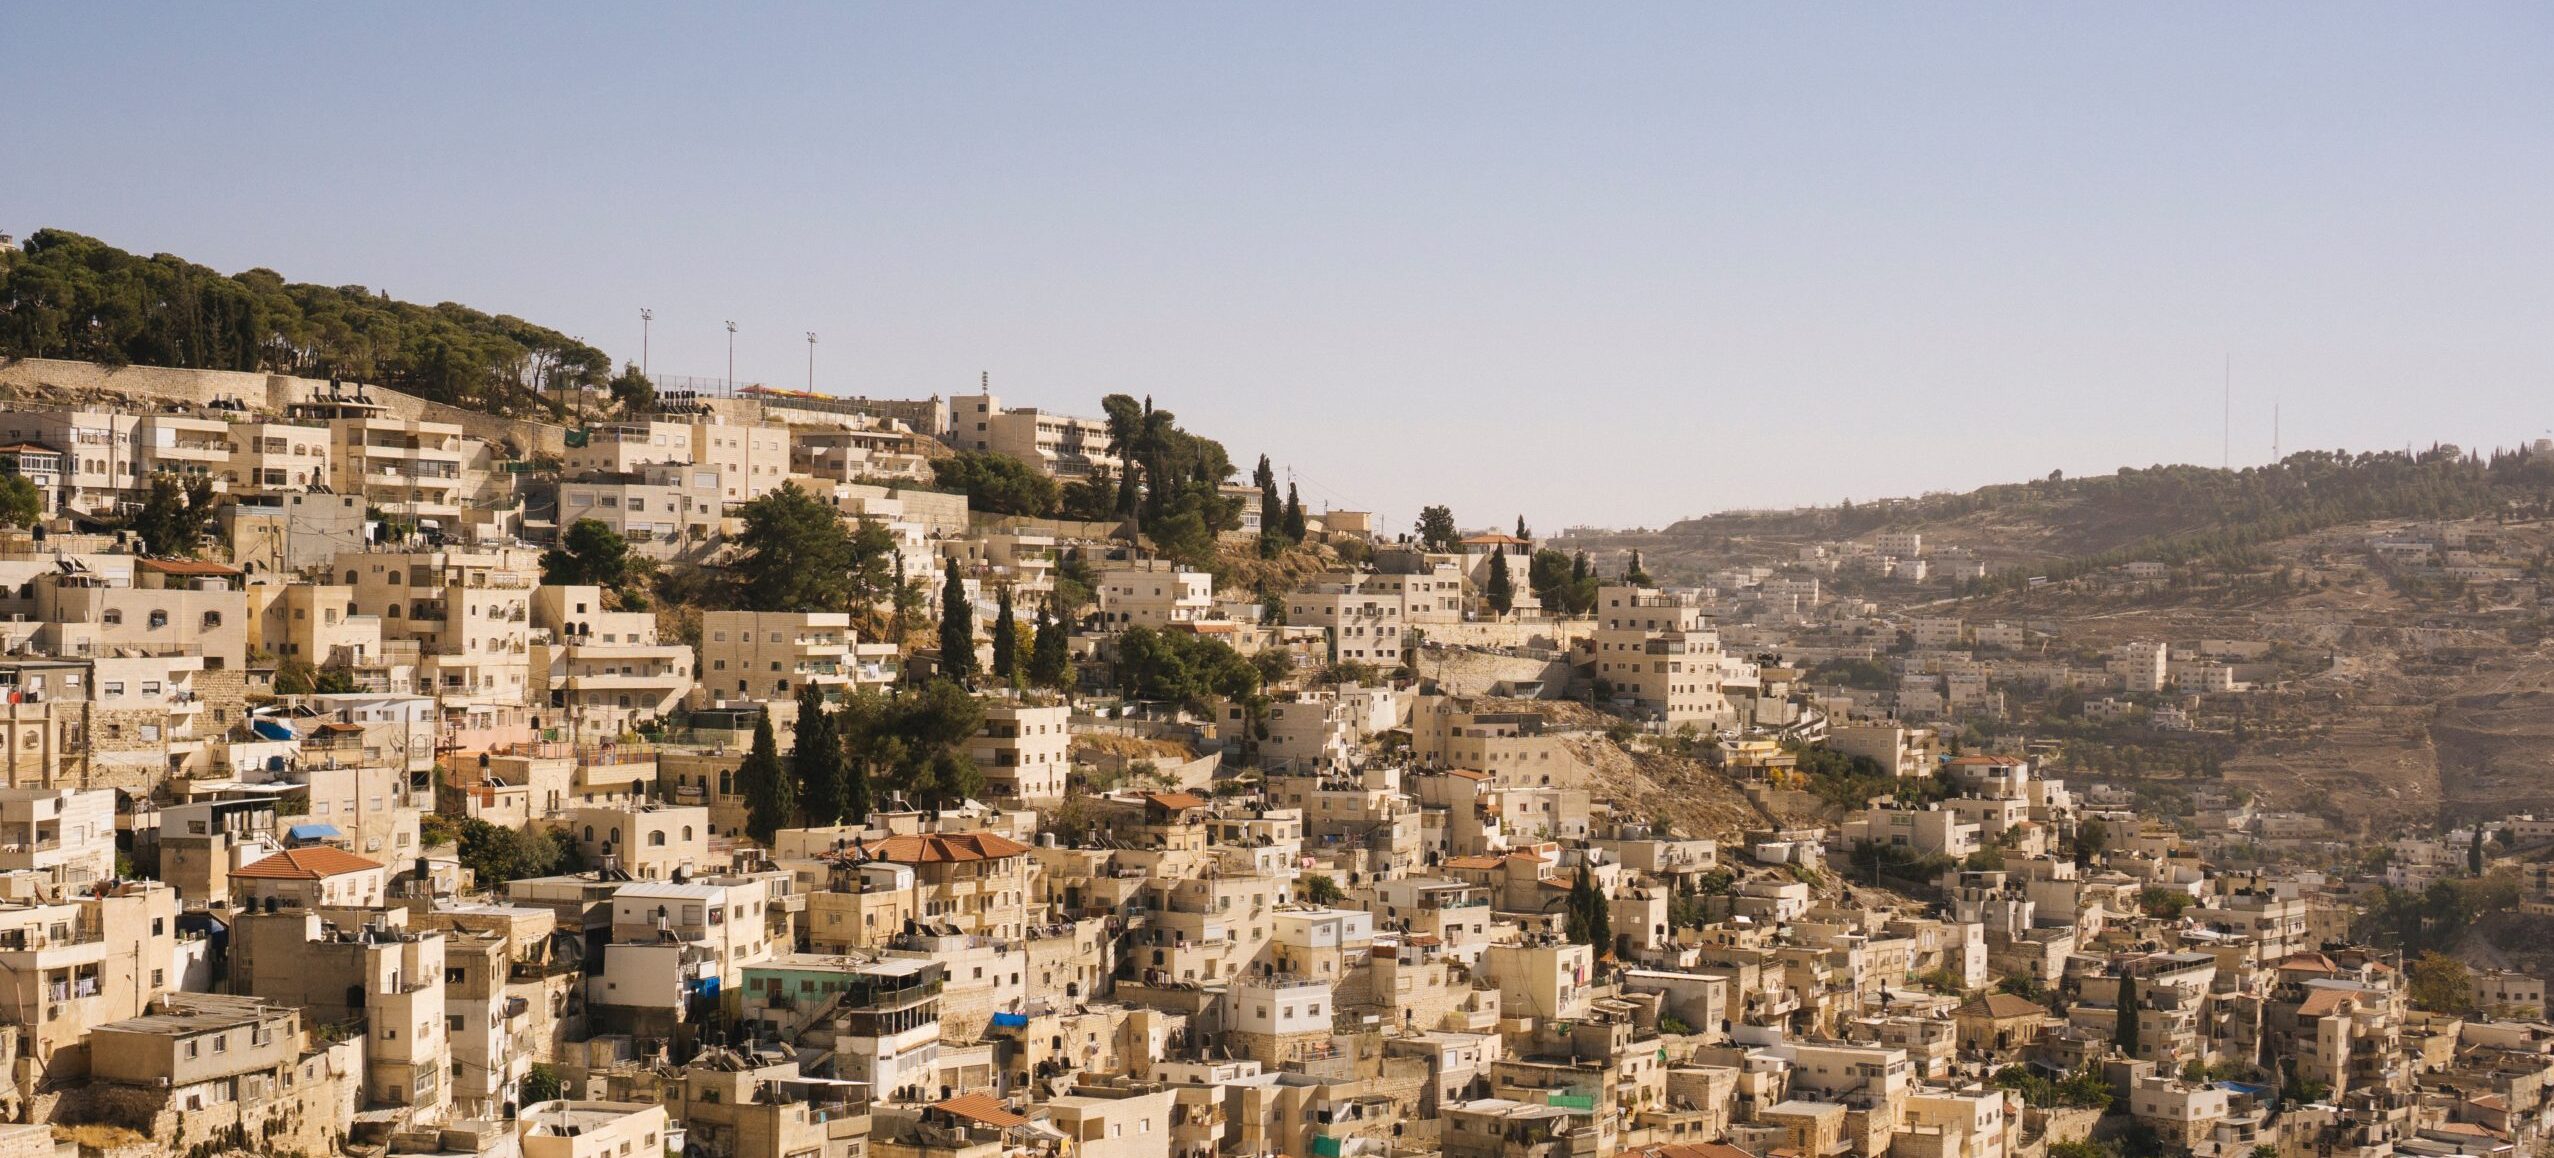 Israeli village on a hill